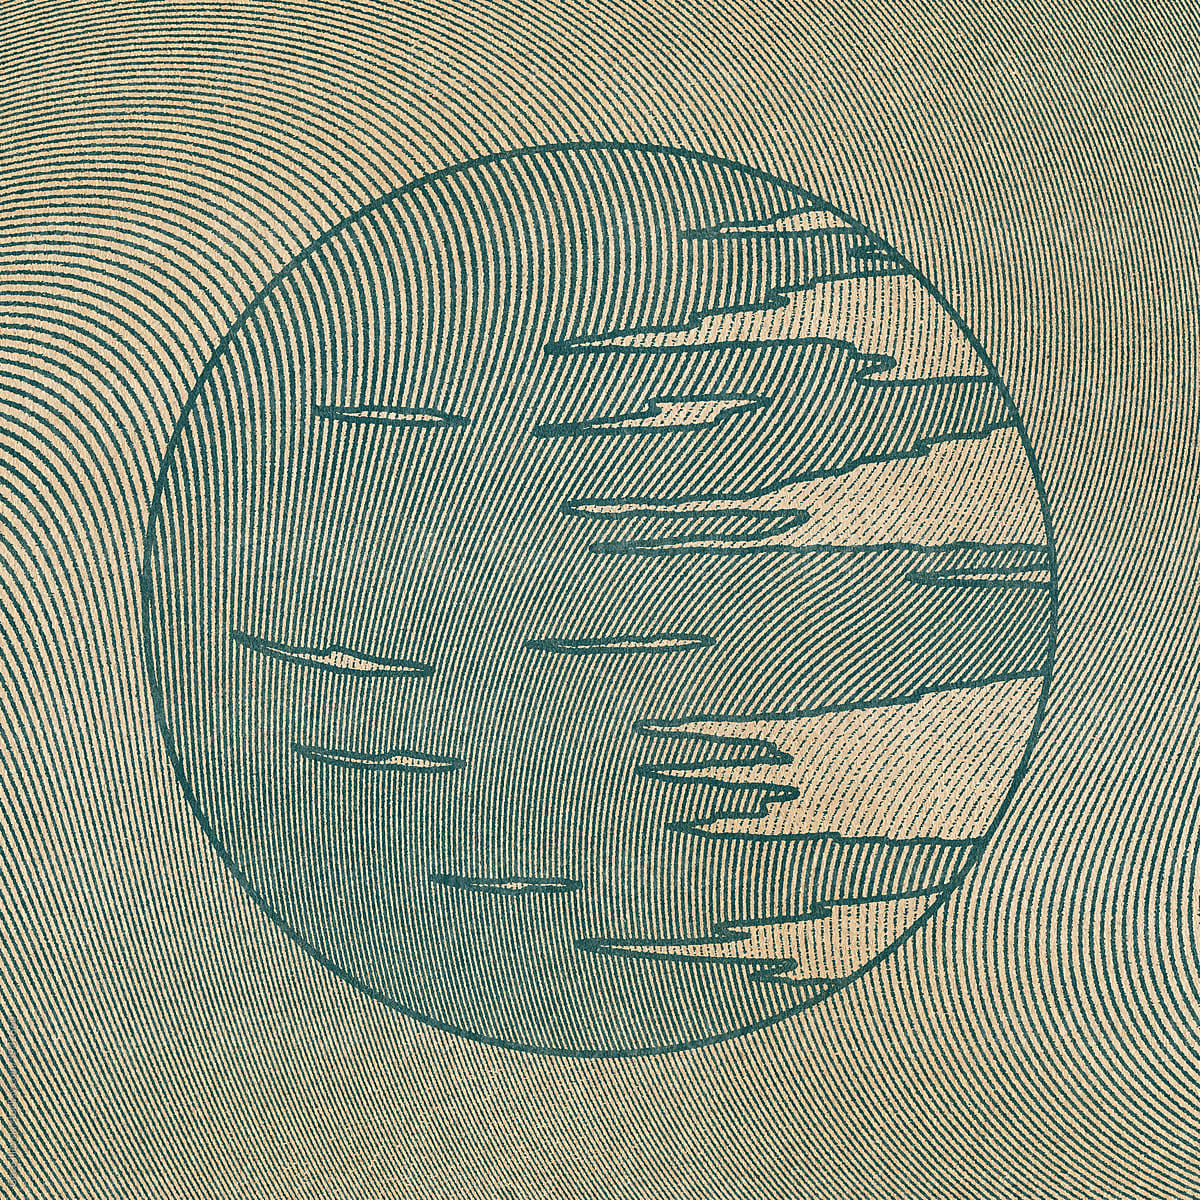 Linocut Planet Illustration